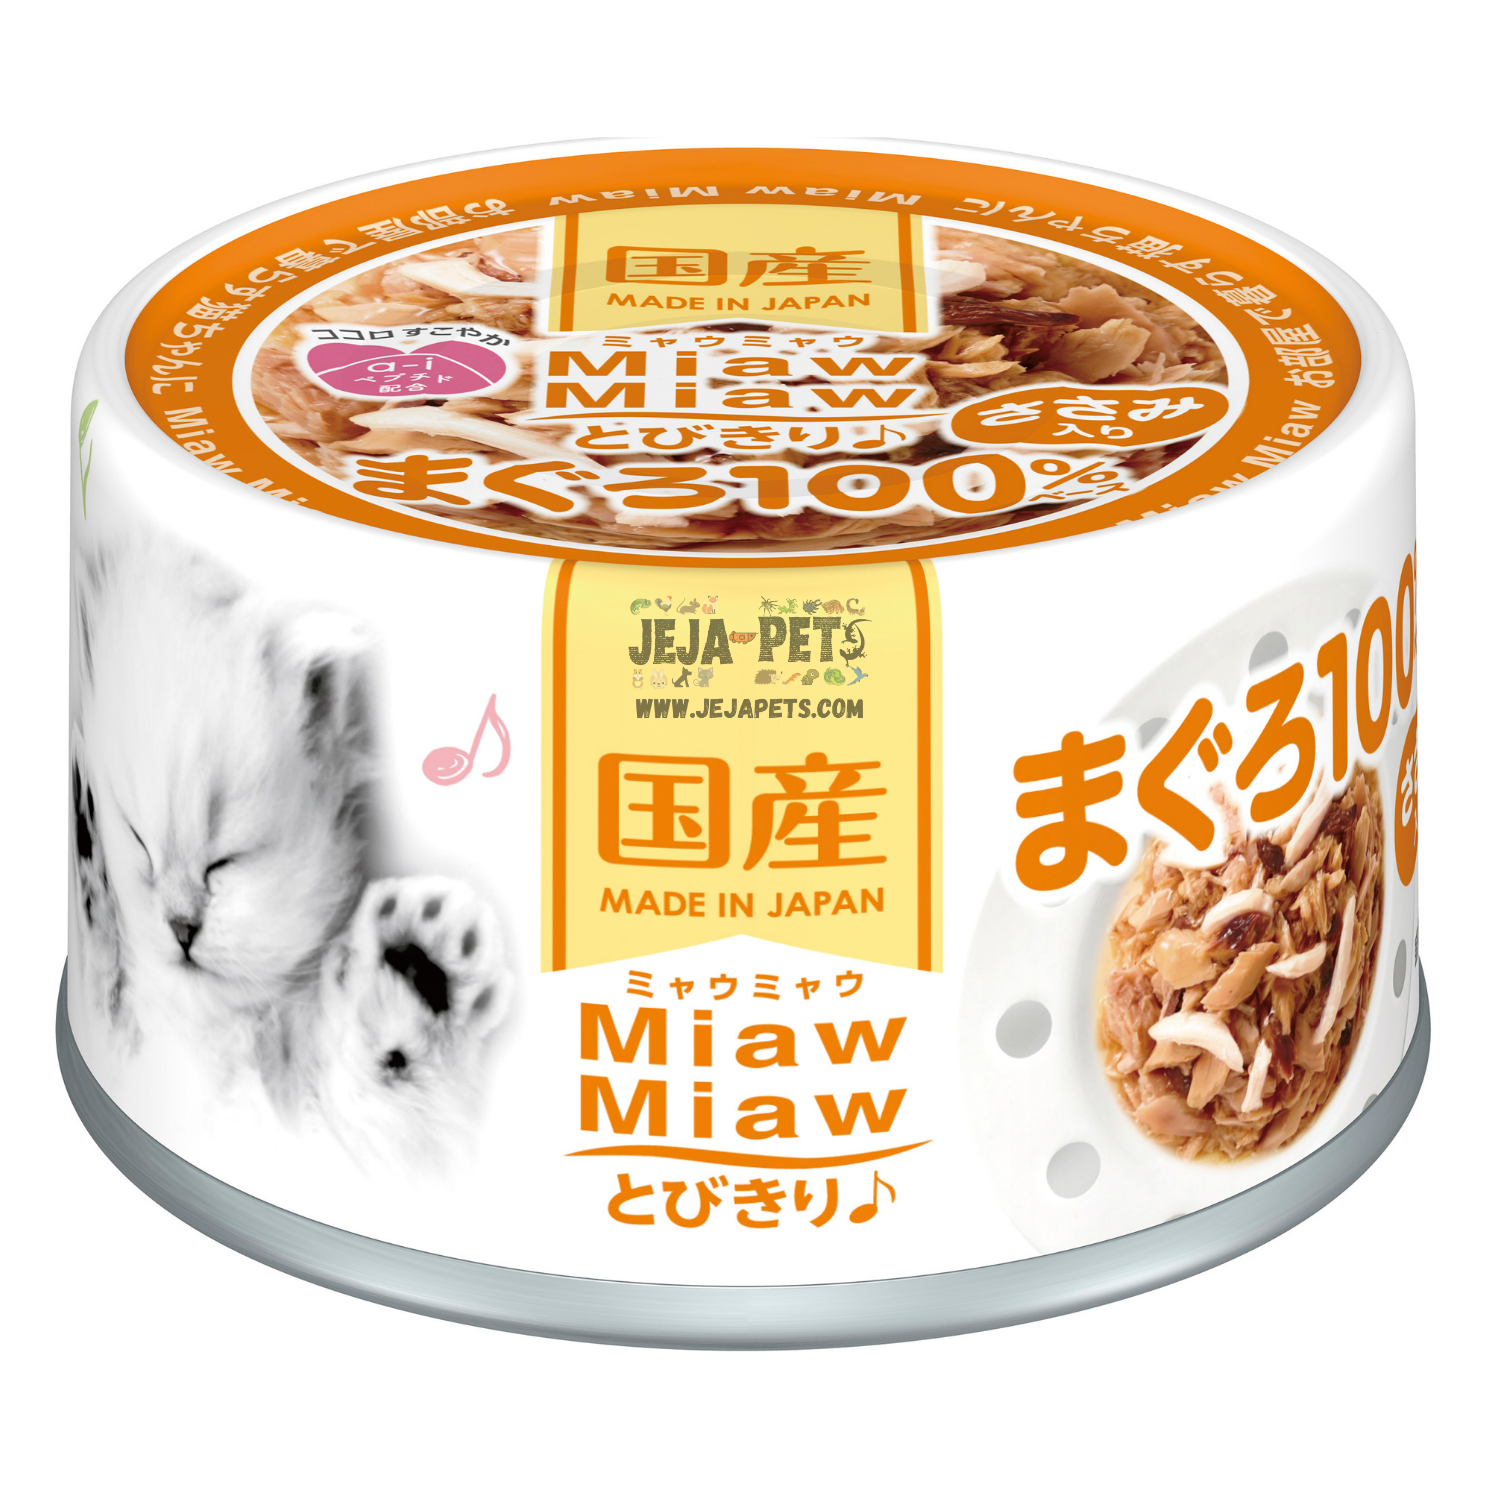 Aixia Miaw Miaw Maguro Tuna with Chicken Cat Canned Food - 60g